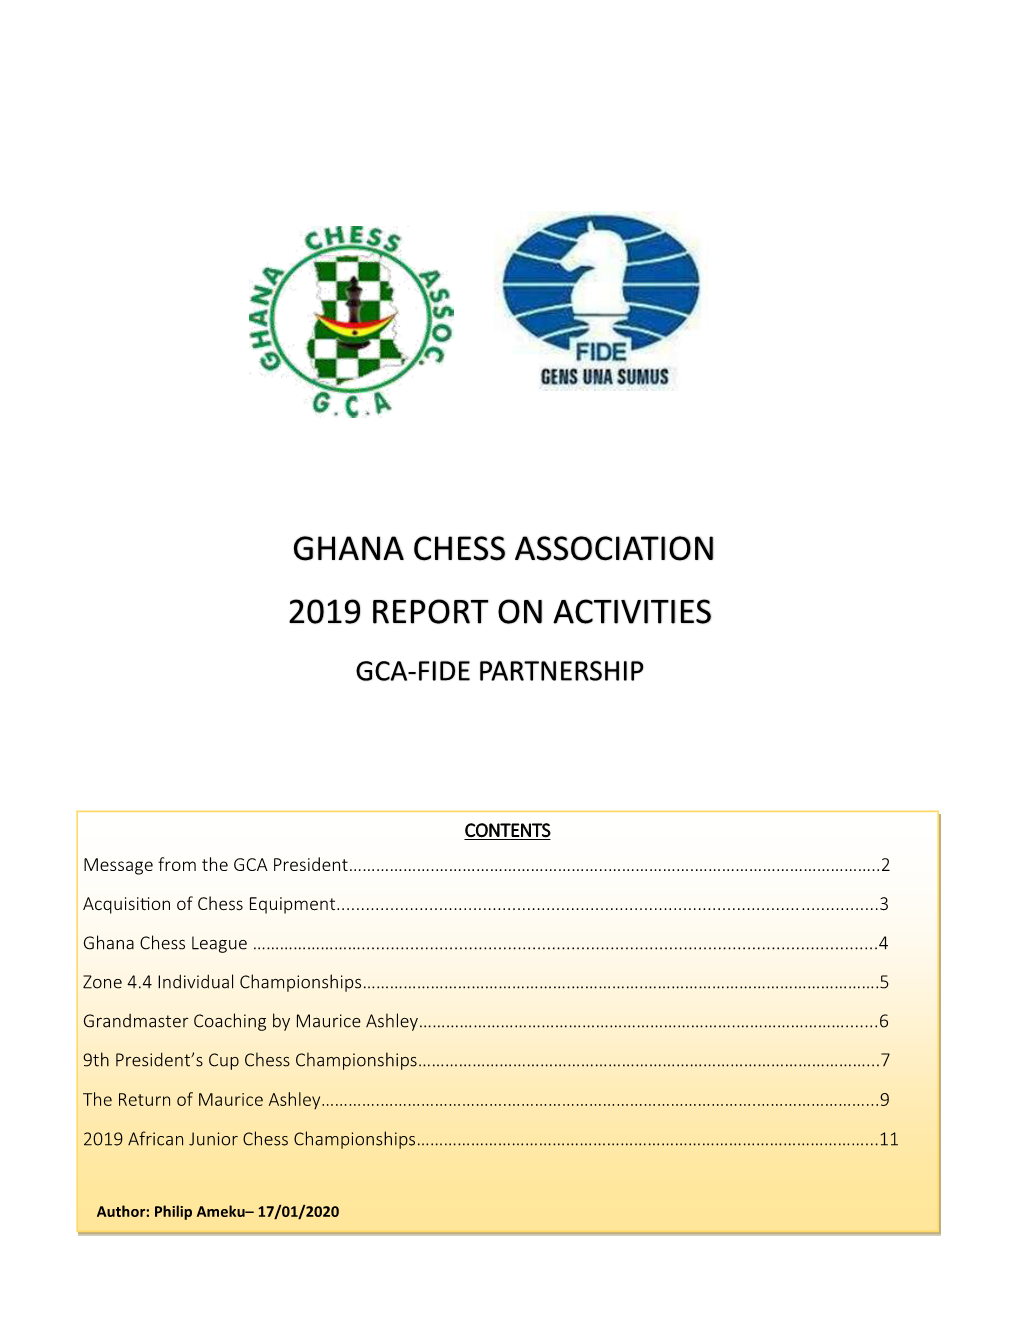 Ghana Chess Association 2019 Report on Activities Gca-Fide Partnership